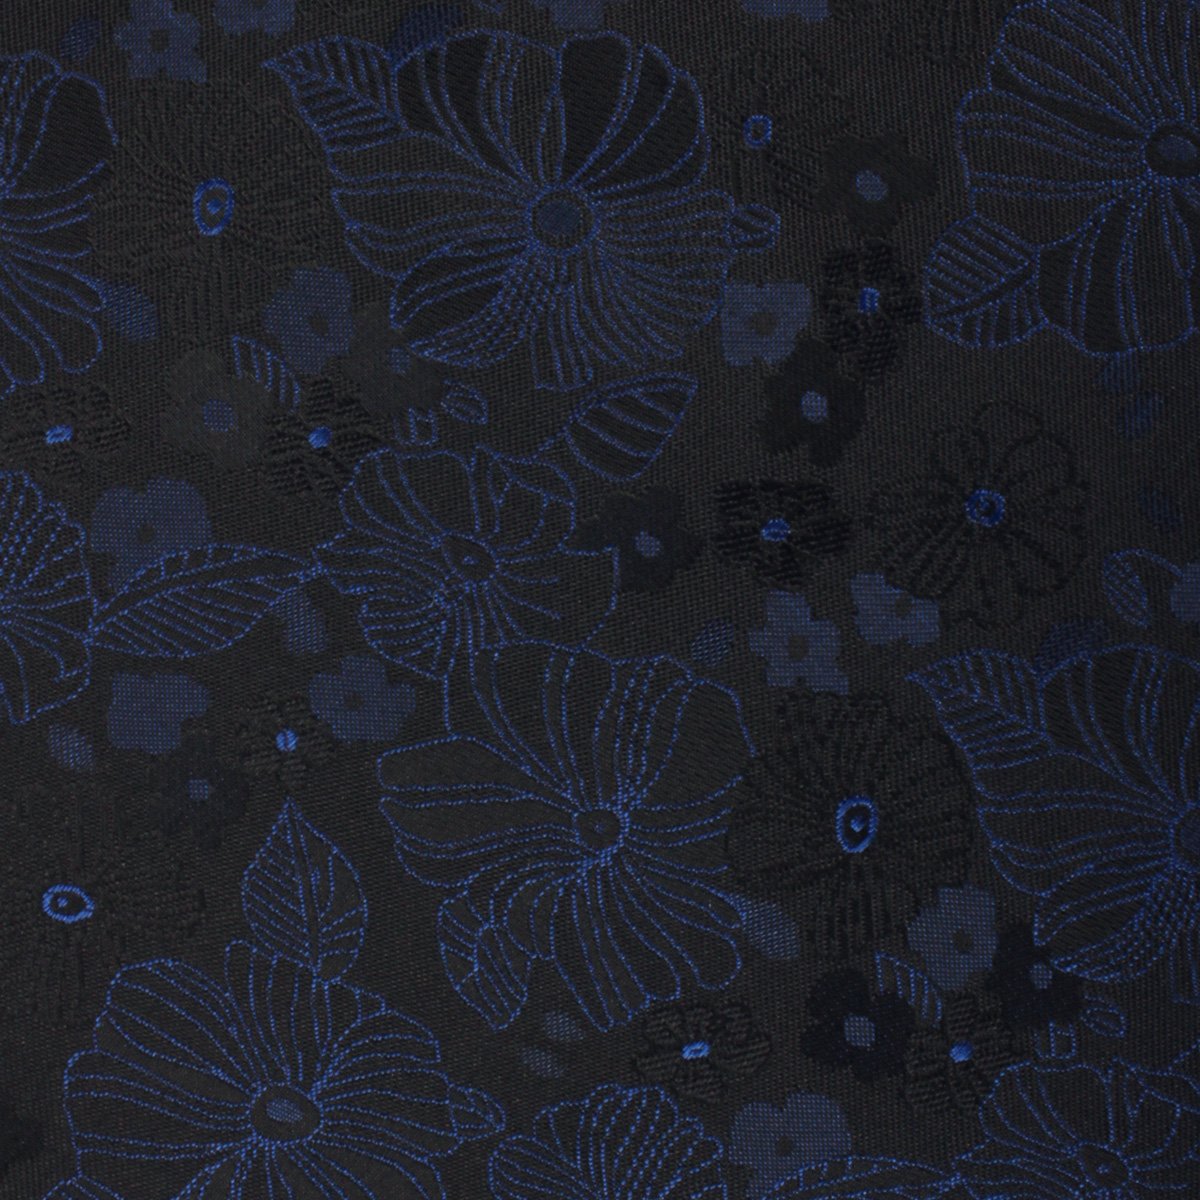 Asagao Midnight Blue-Black Floral Necktie Fabric